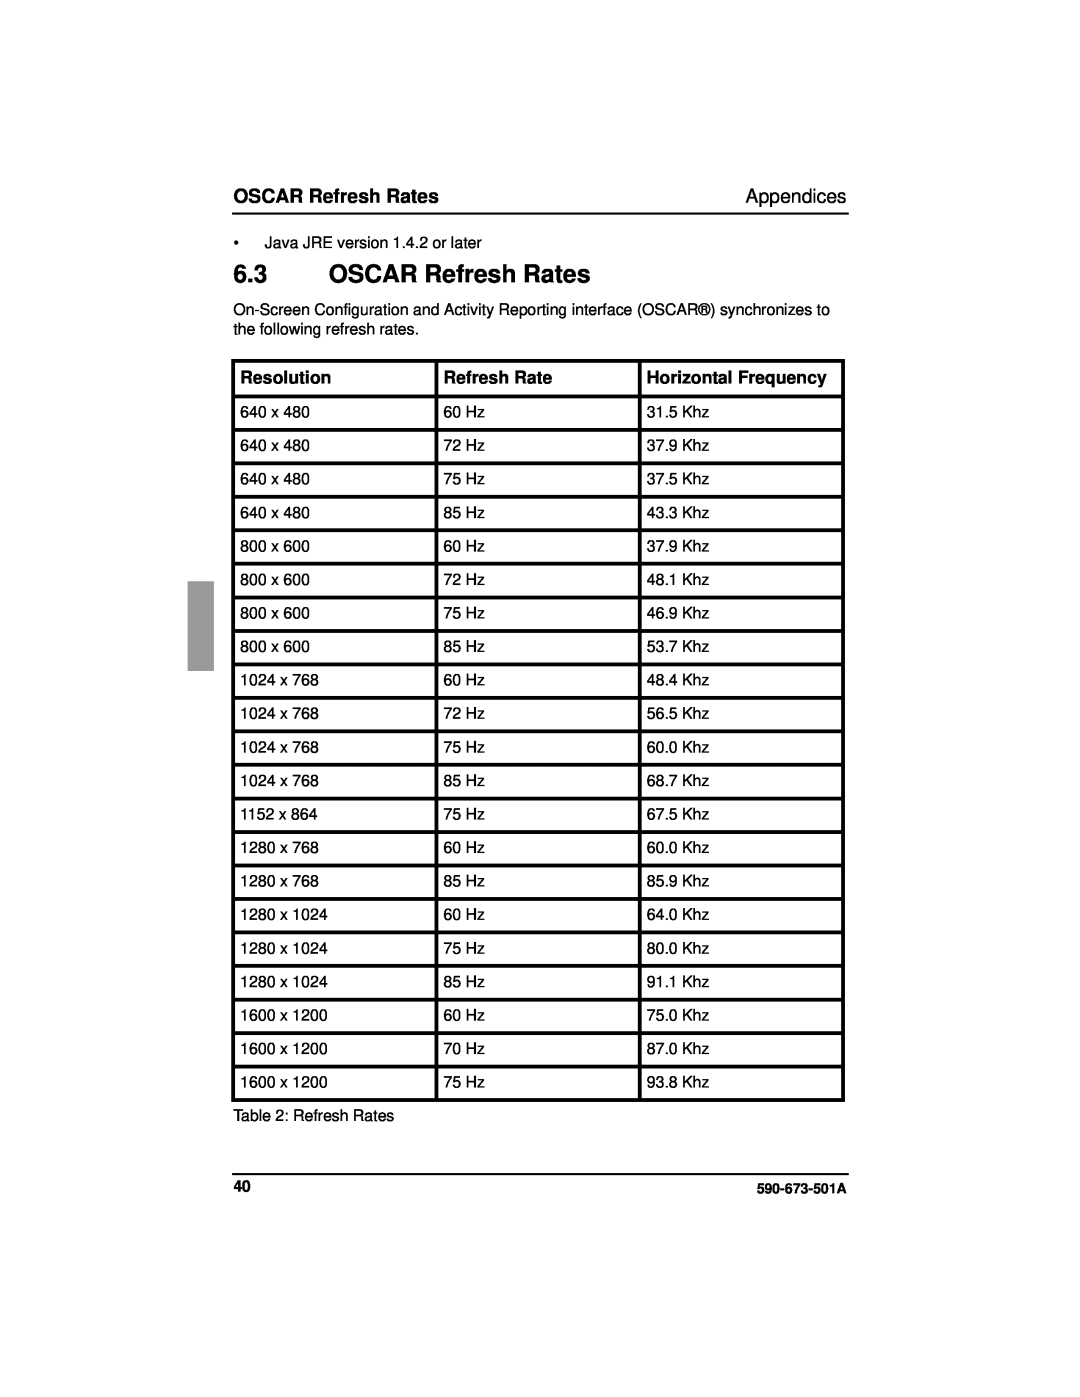 Fujitsu Siemens Computers BX600 manual OSCAR Refresh Rates, Appendices, Resolution, Horizontal Frequency 